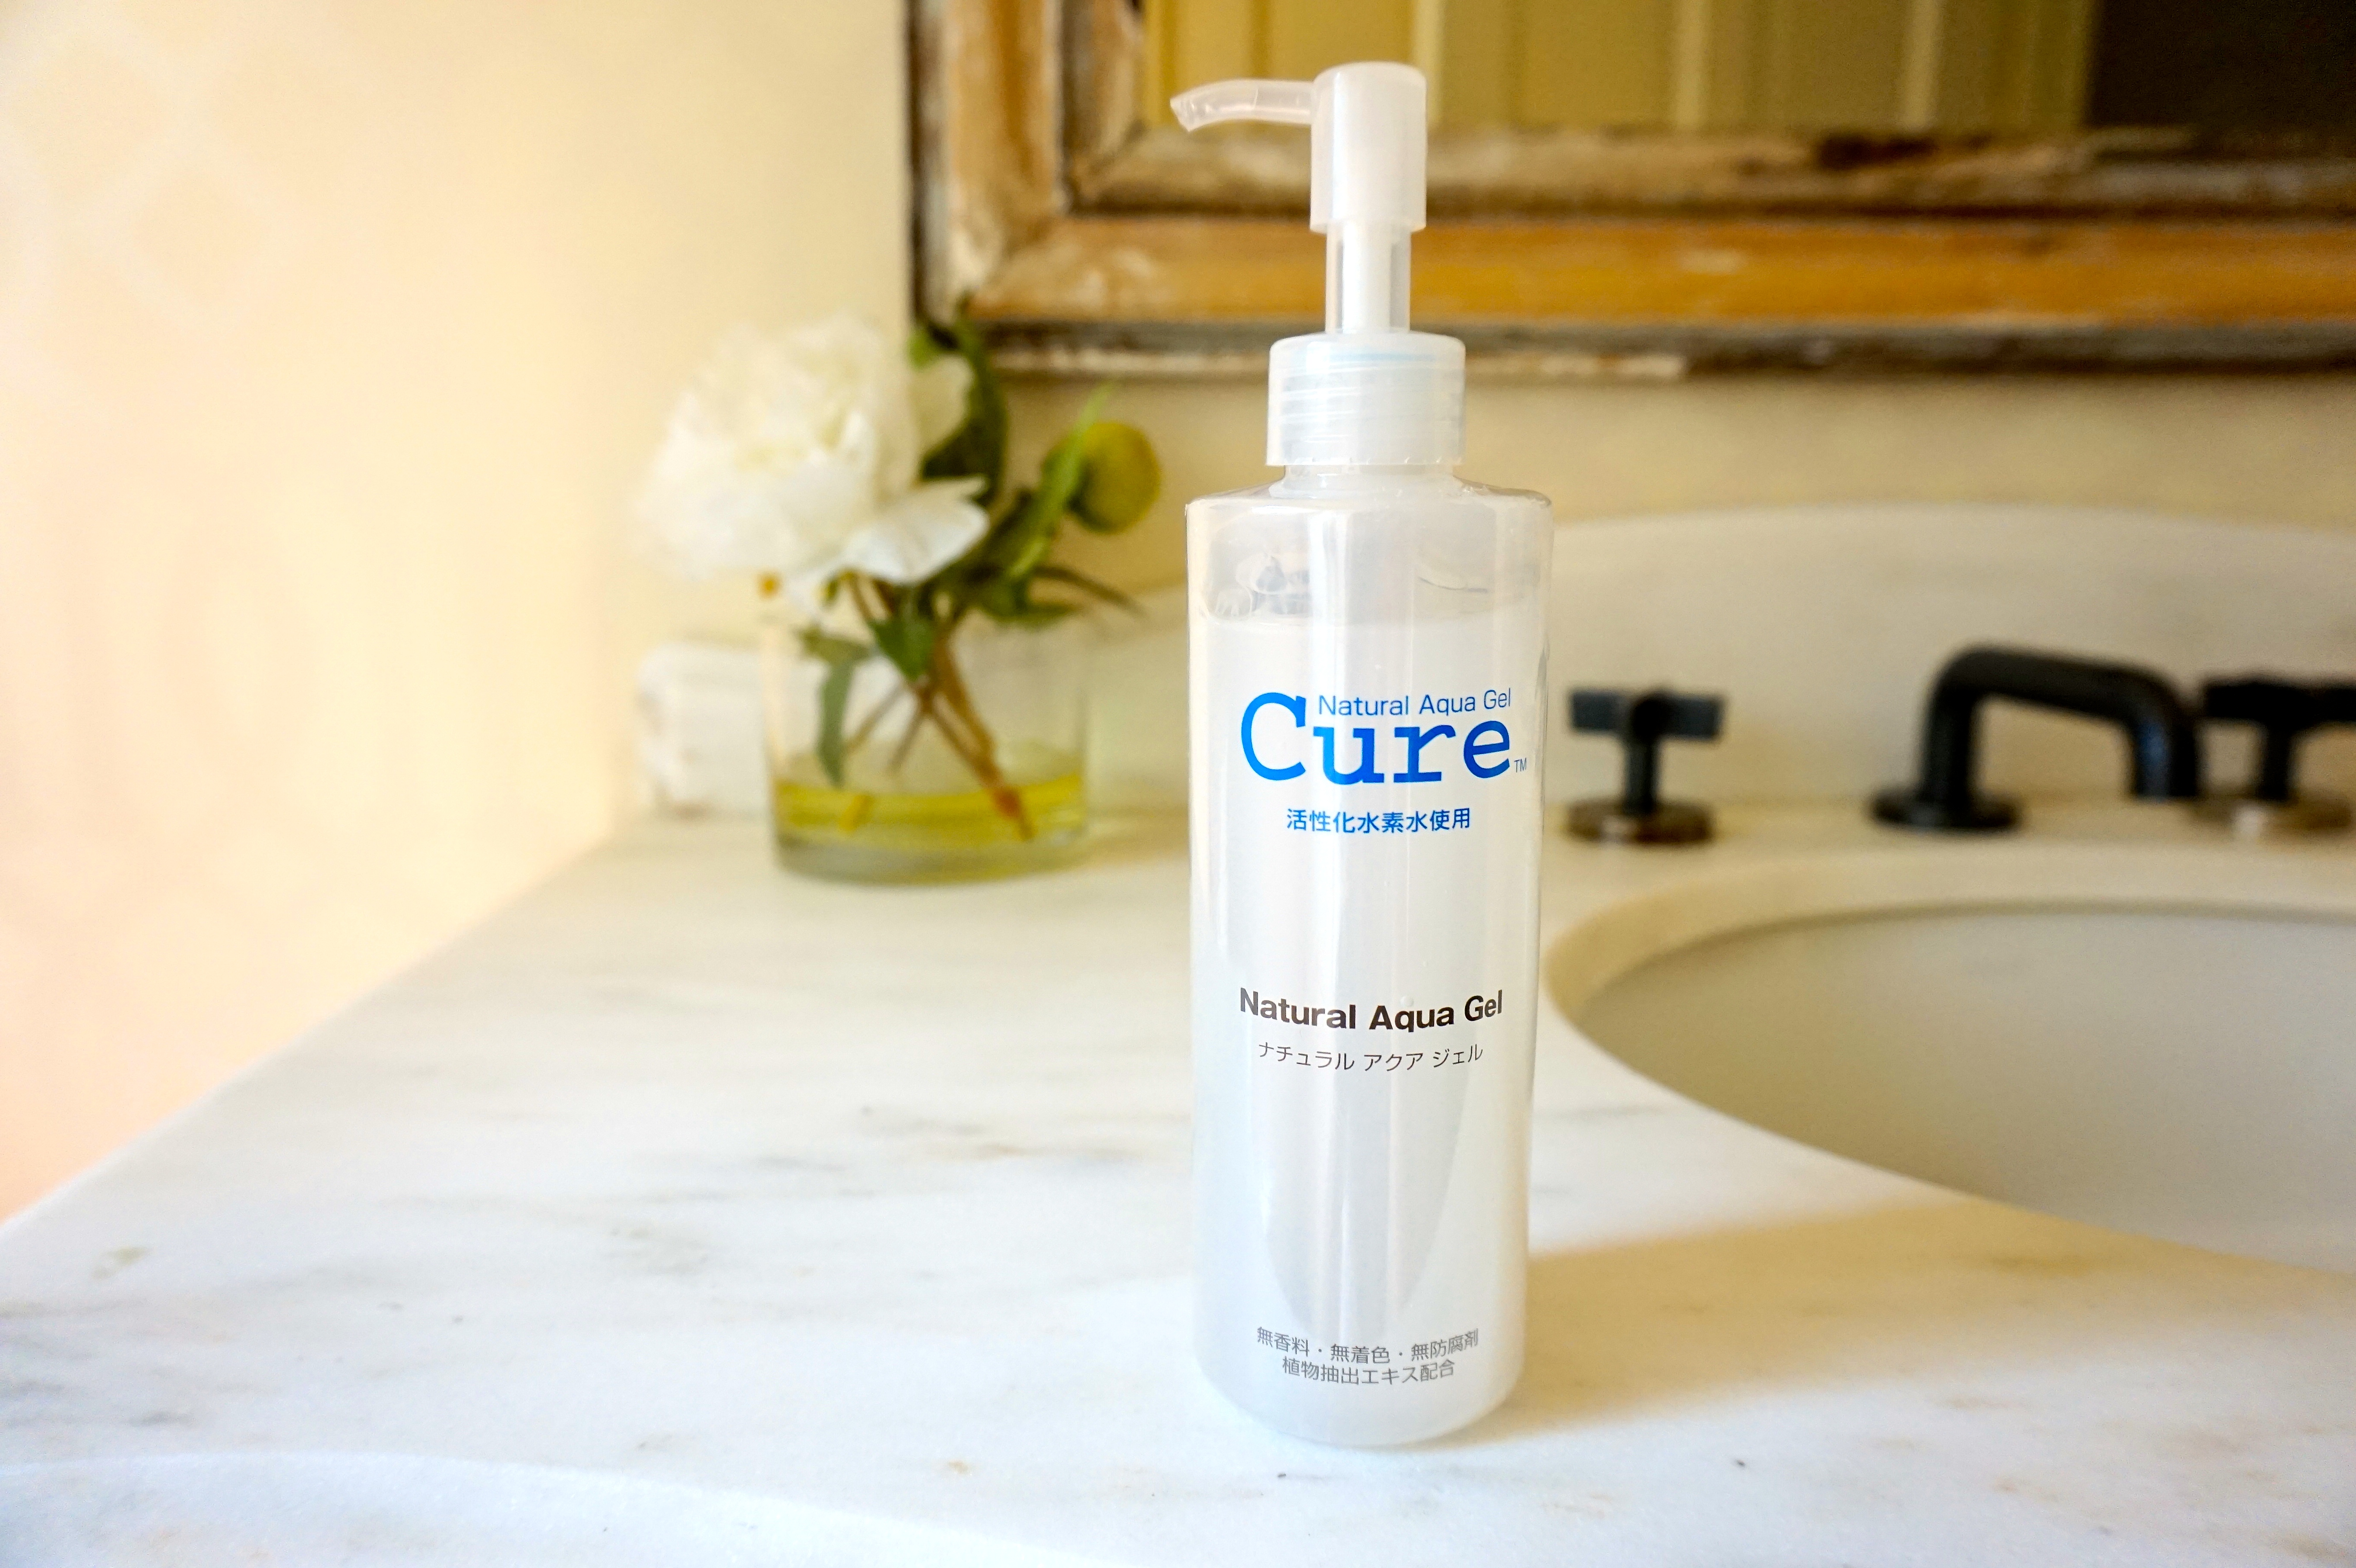 Natural Aqua Gel Cure Face Scrub Review